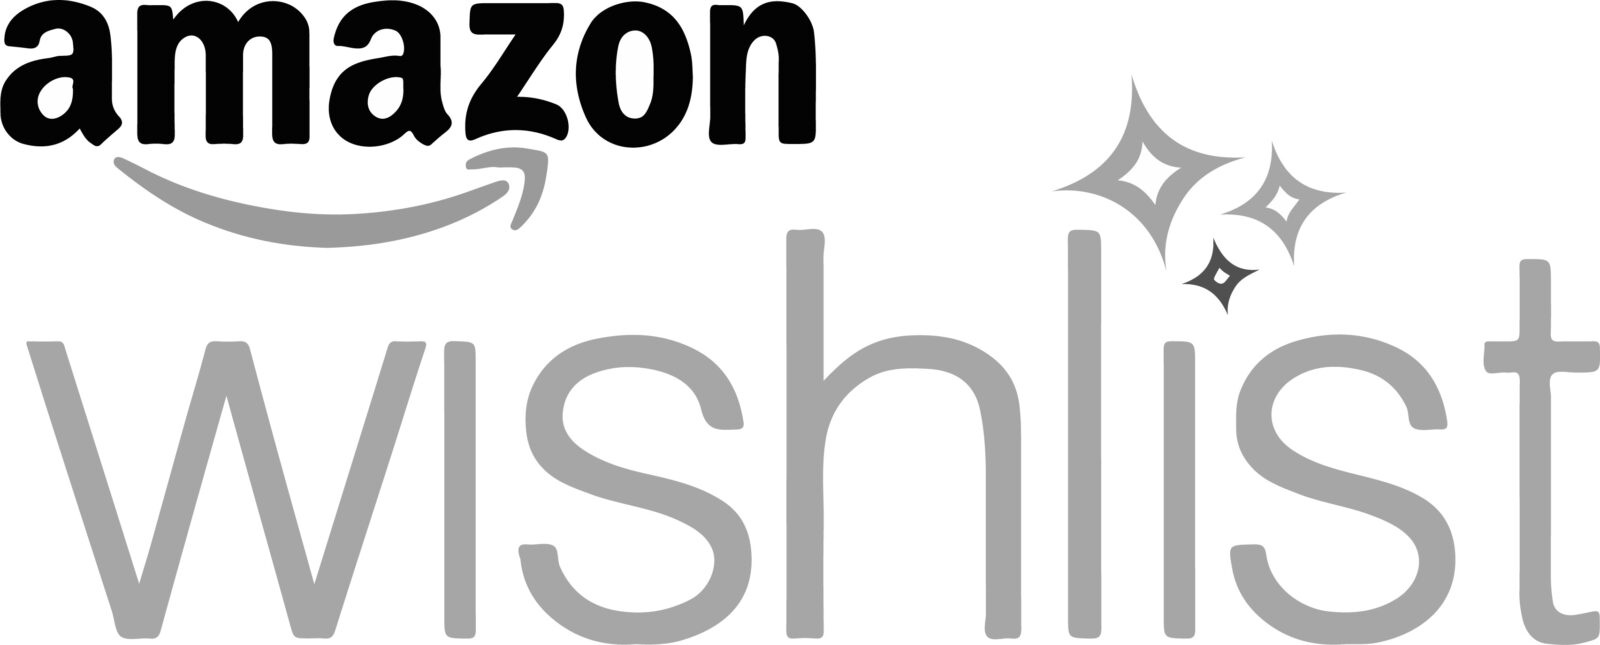 Amazon-wishlist-logo